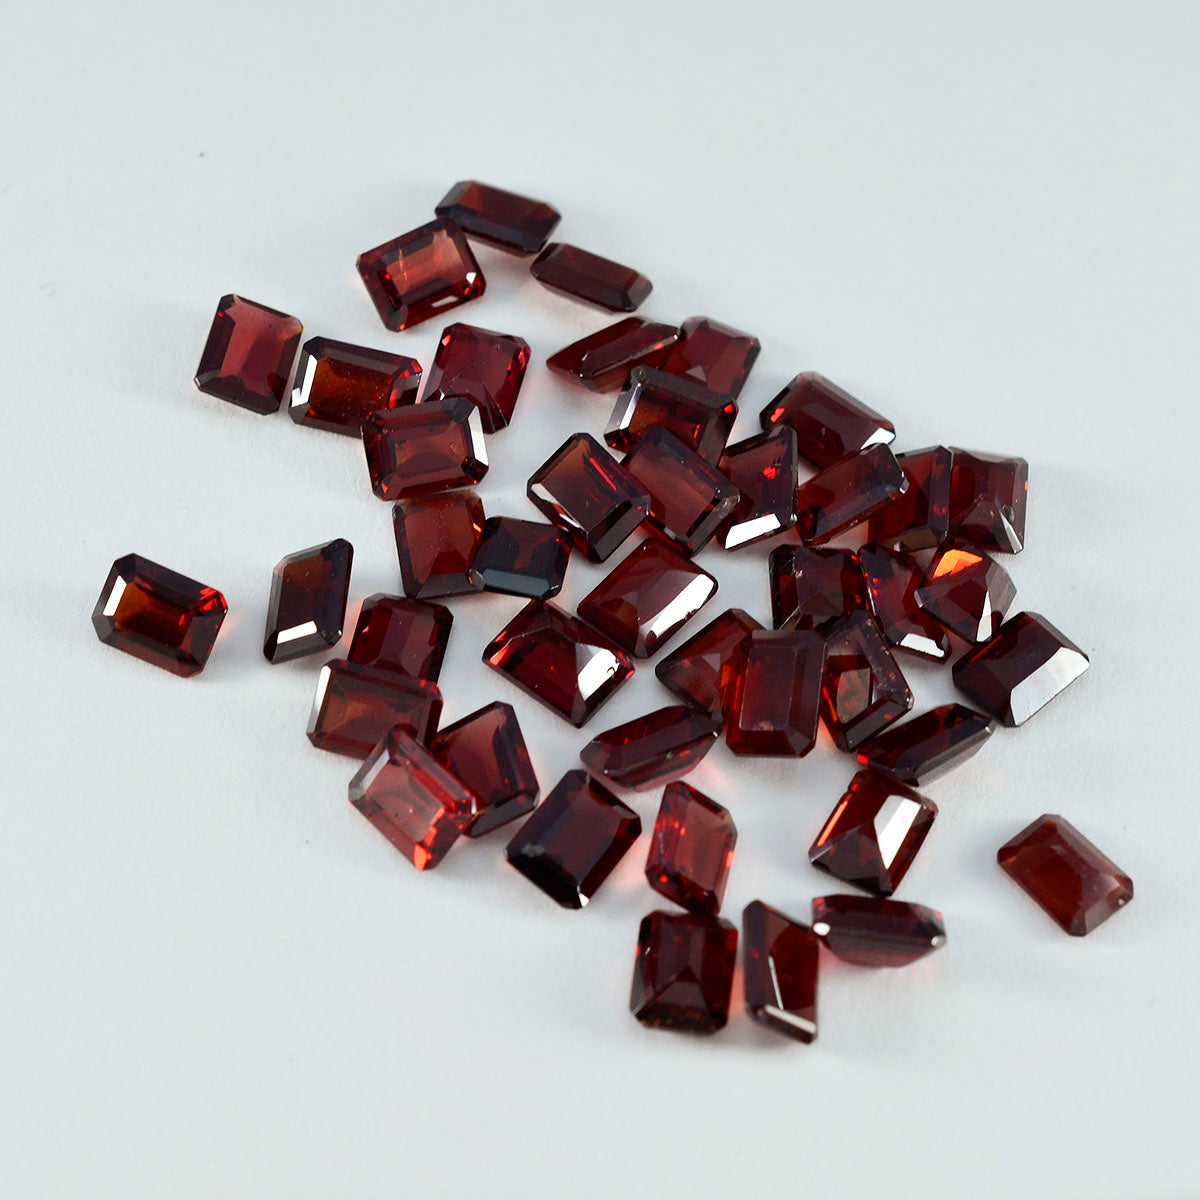 Riyogems 1PC Genuine Red Garnet Faceted 3x5 mm Octagon Shape A+ Quality Stone